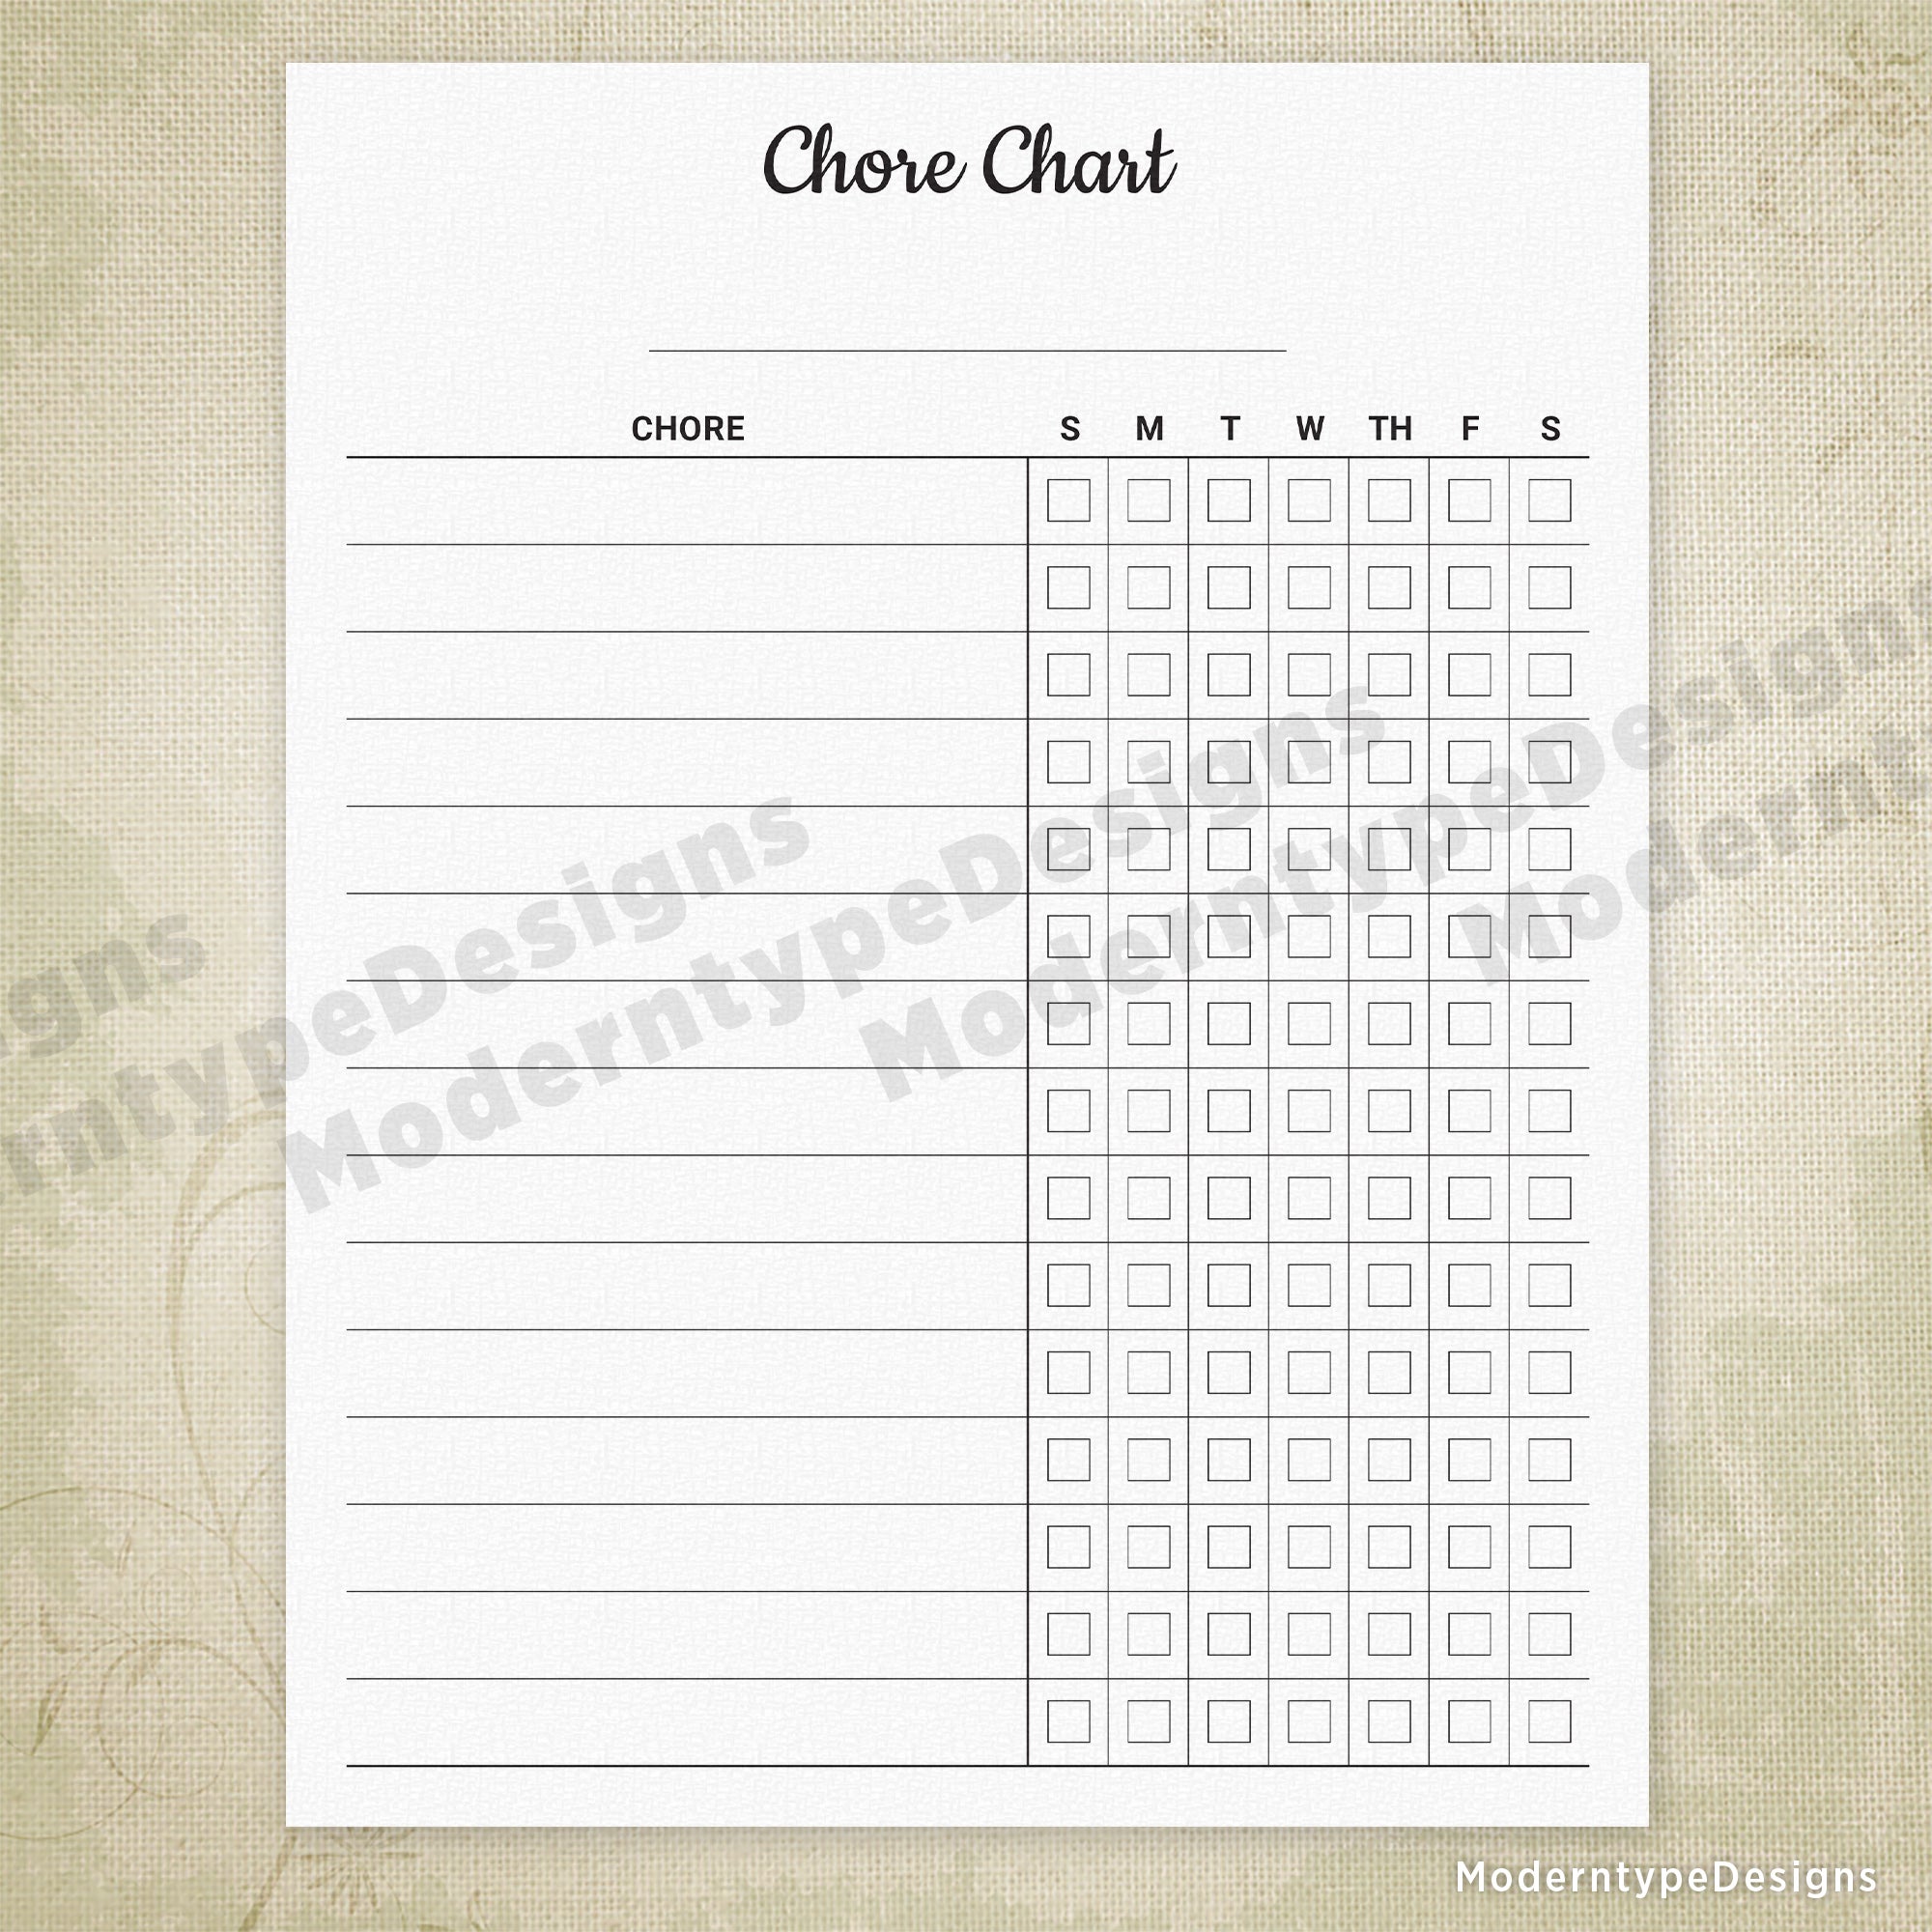 Chore Chart Printable Form